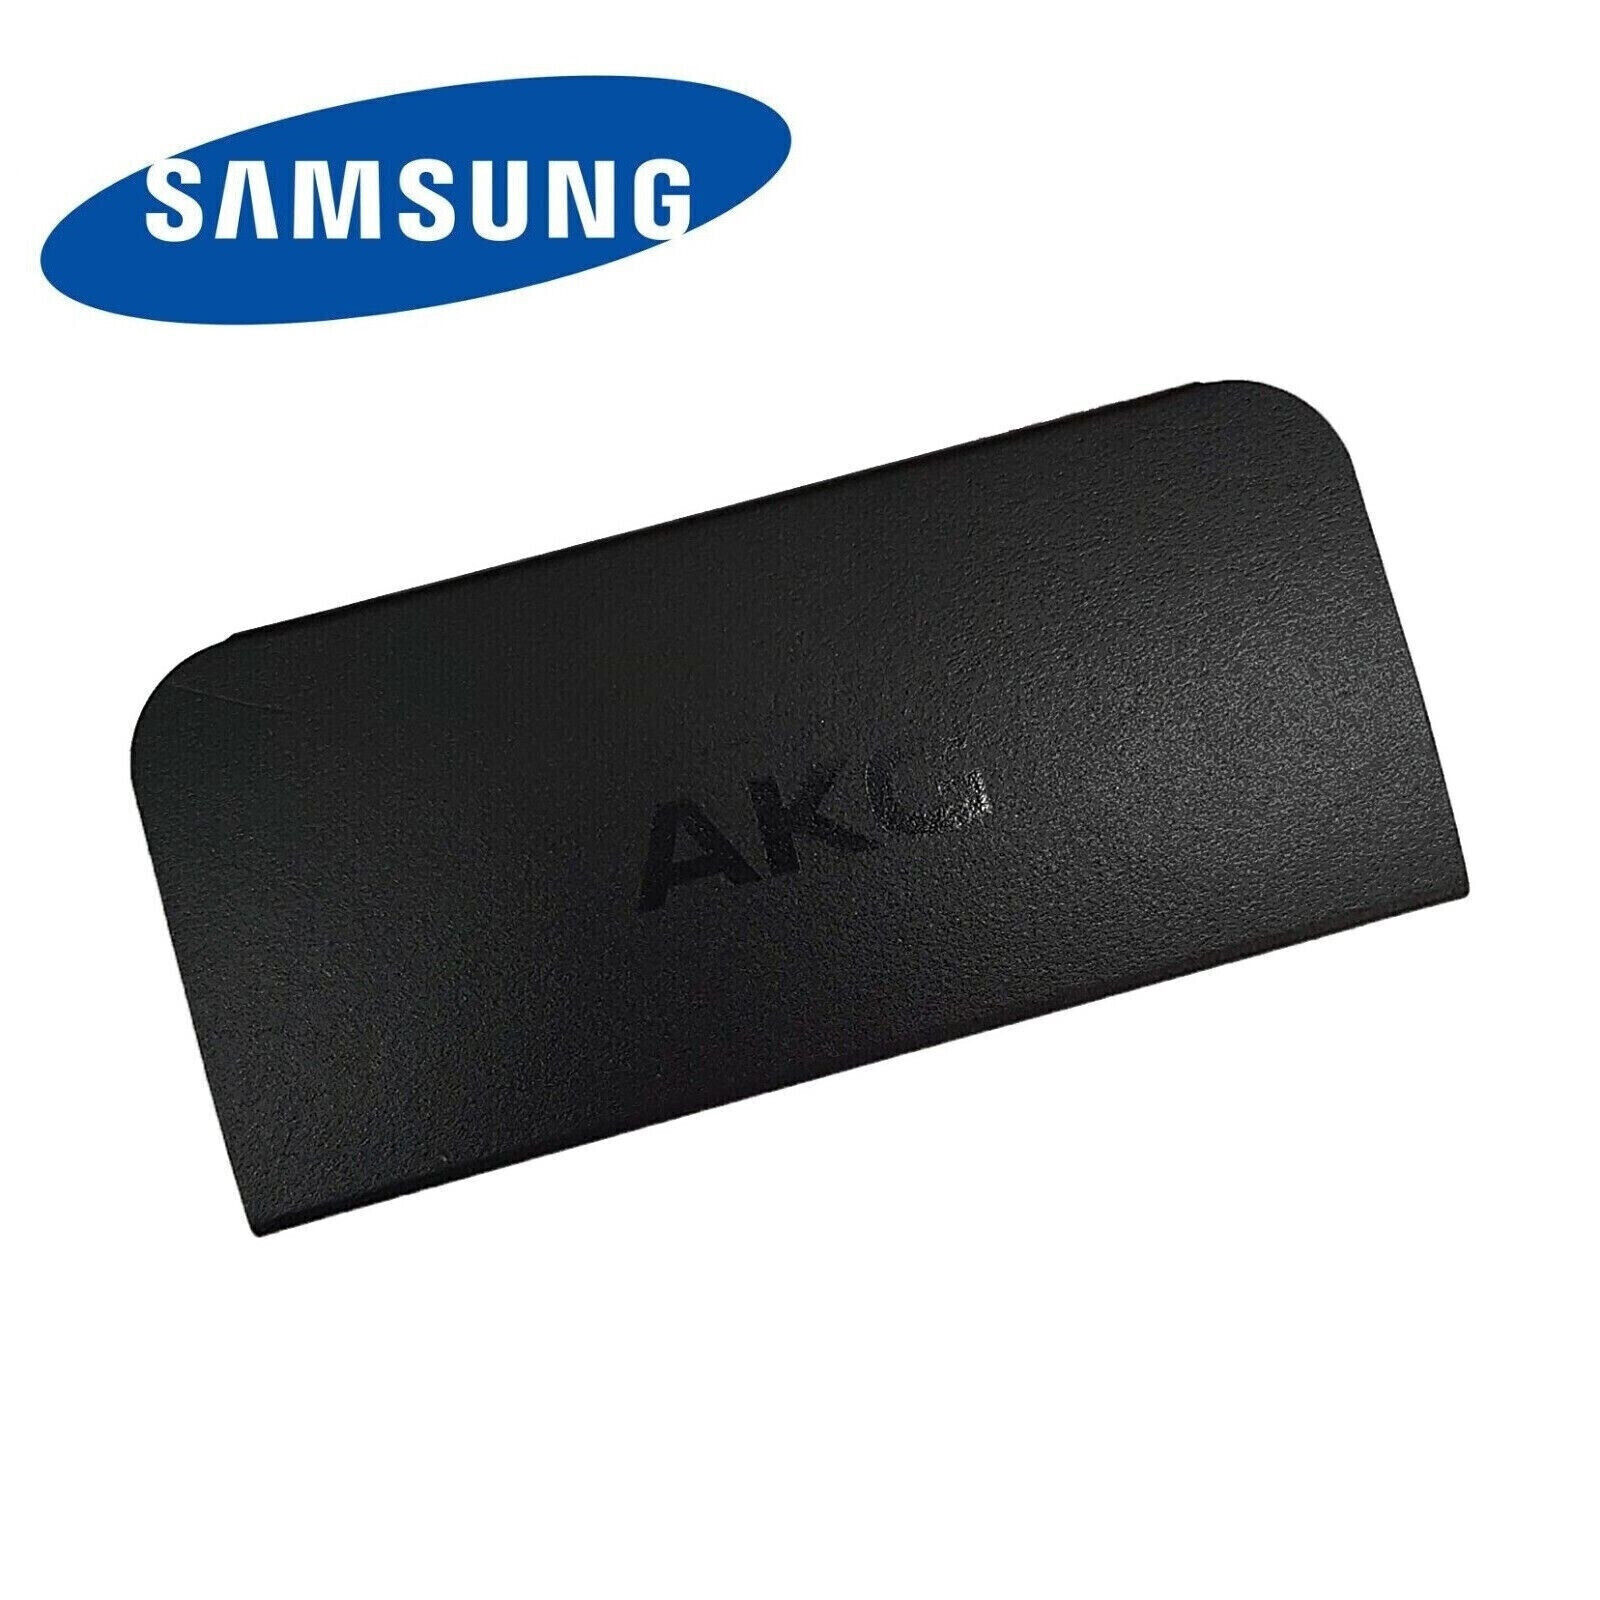 5 PACK Genuine Samsung Galaxy Earphones - USB-C, Black, AKG Tuned (GH59-15252A) - $69.29